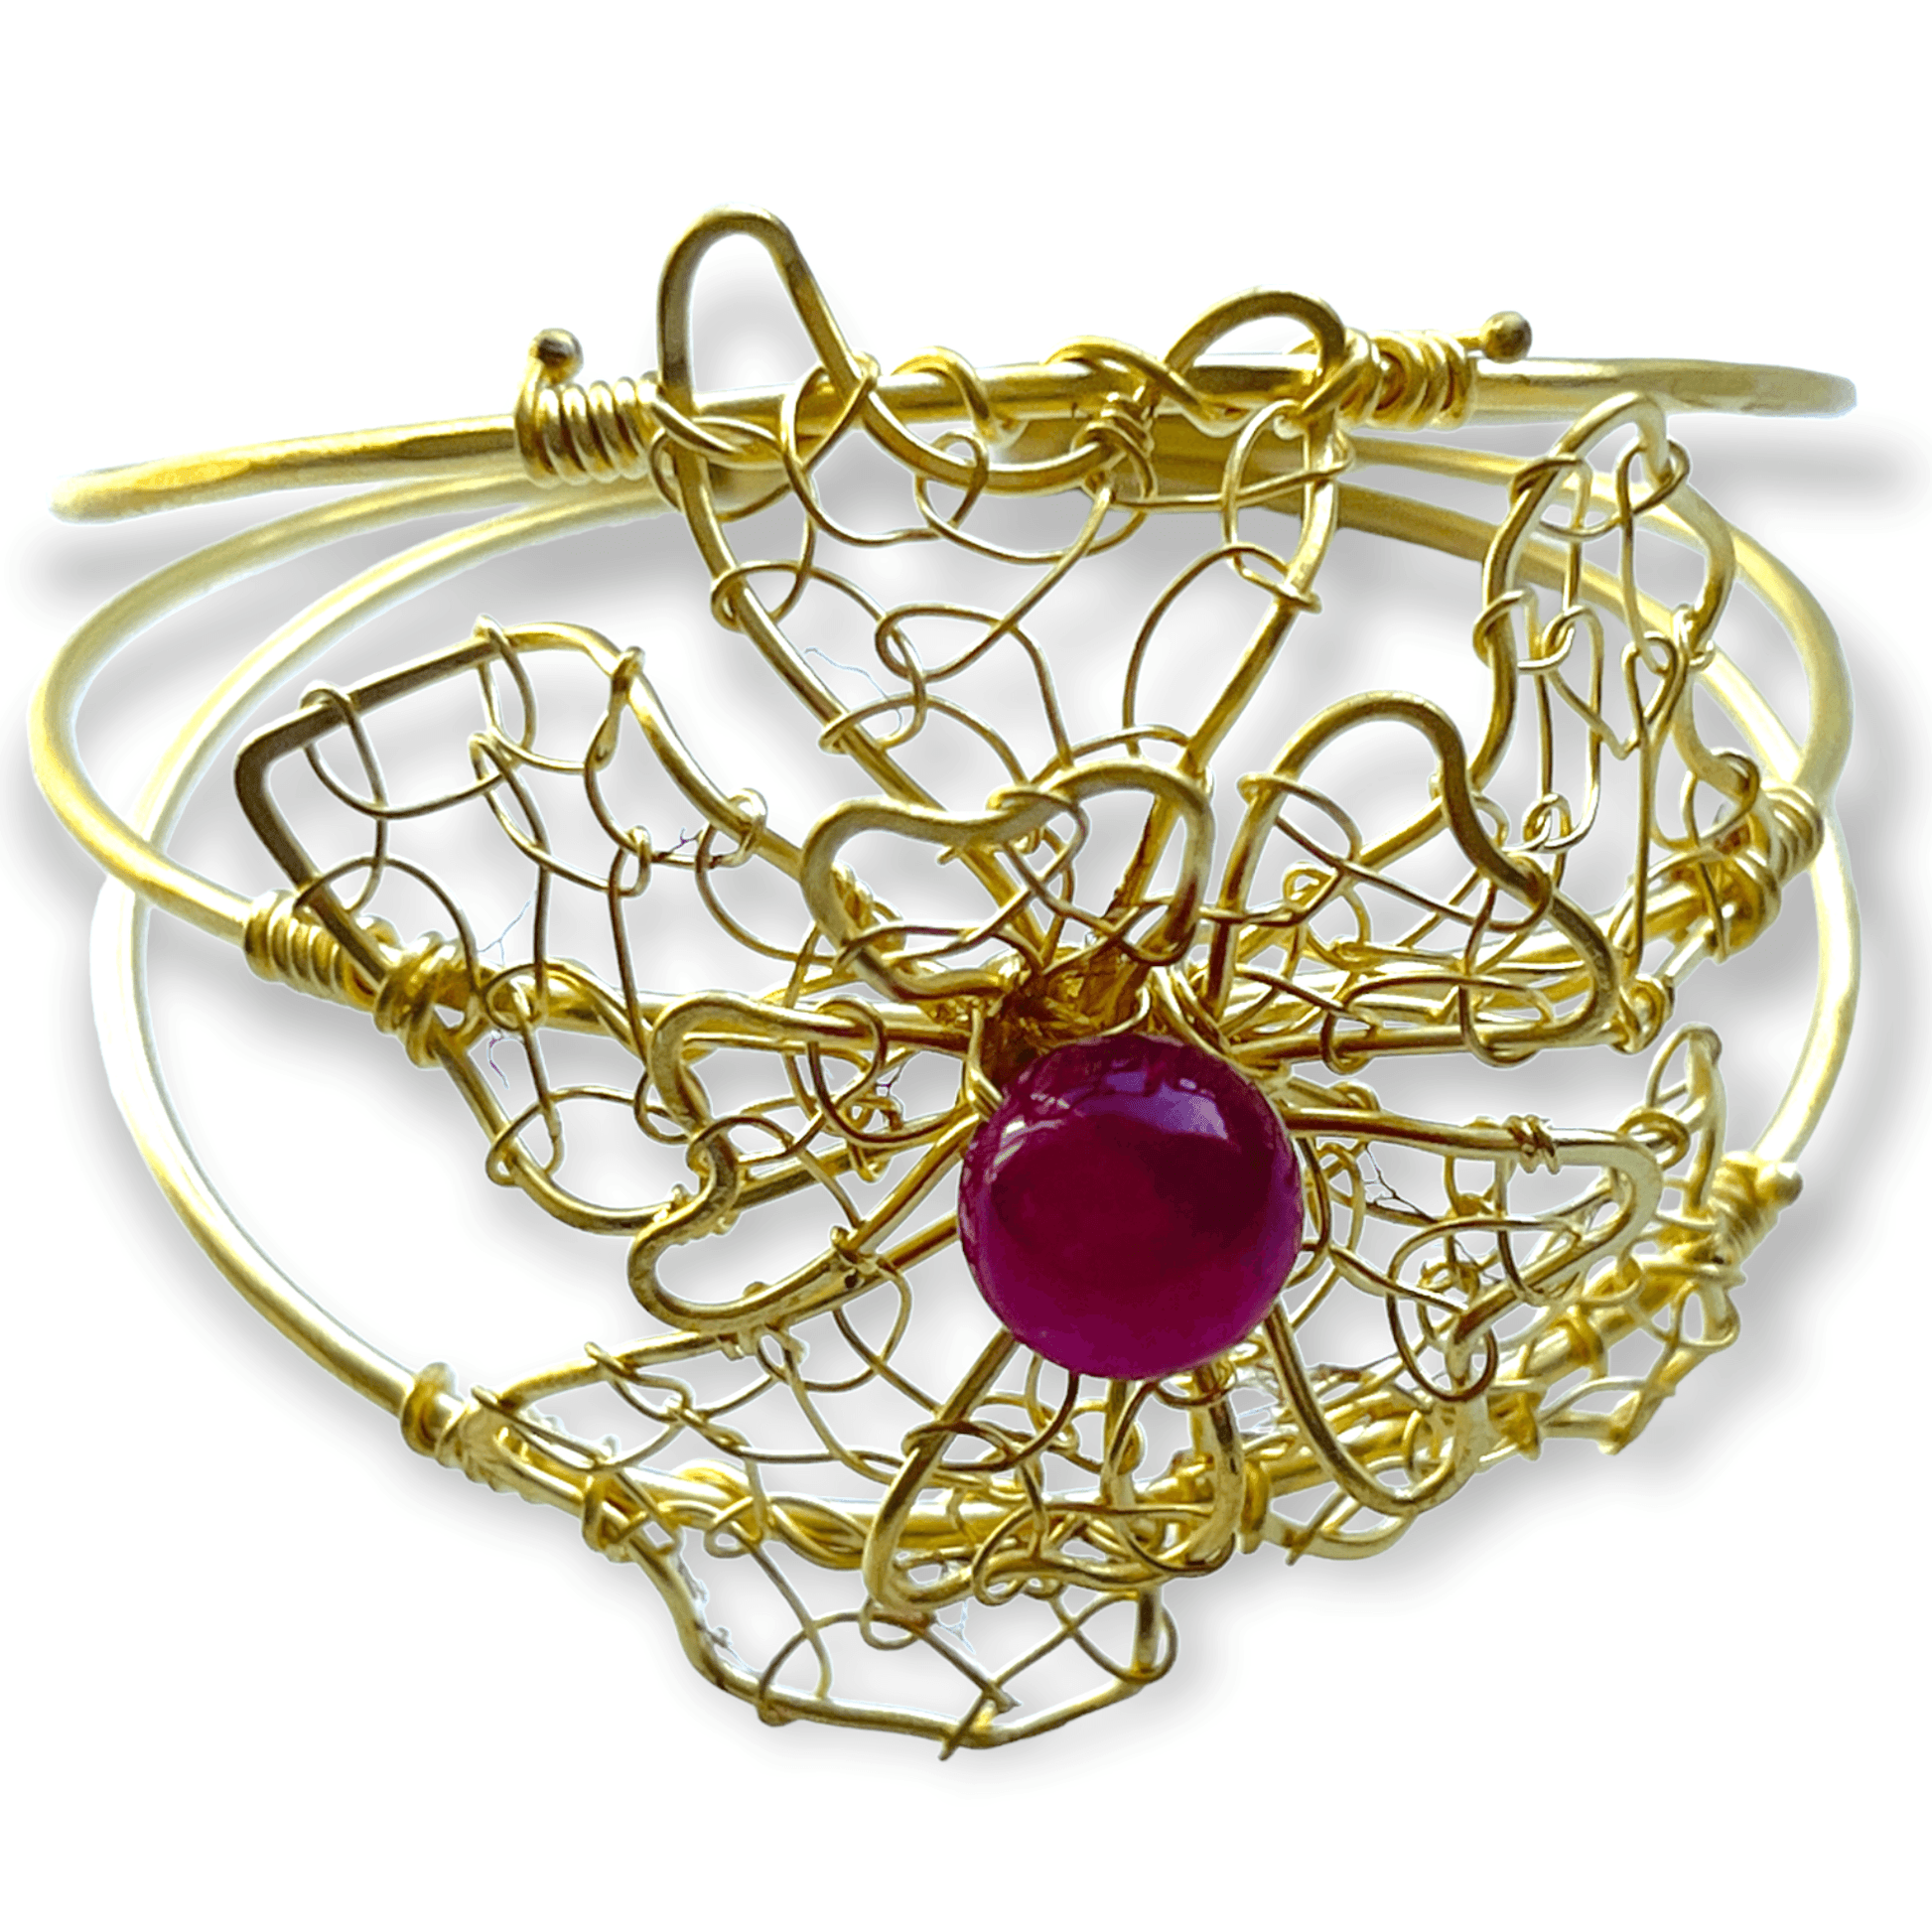 Floral inspired lacy gemstone cuff braceletSundara Joon